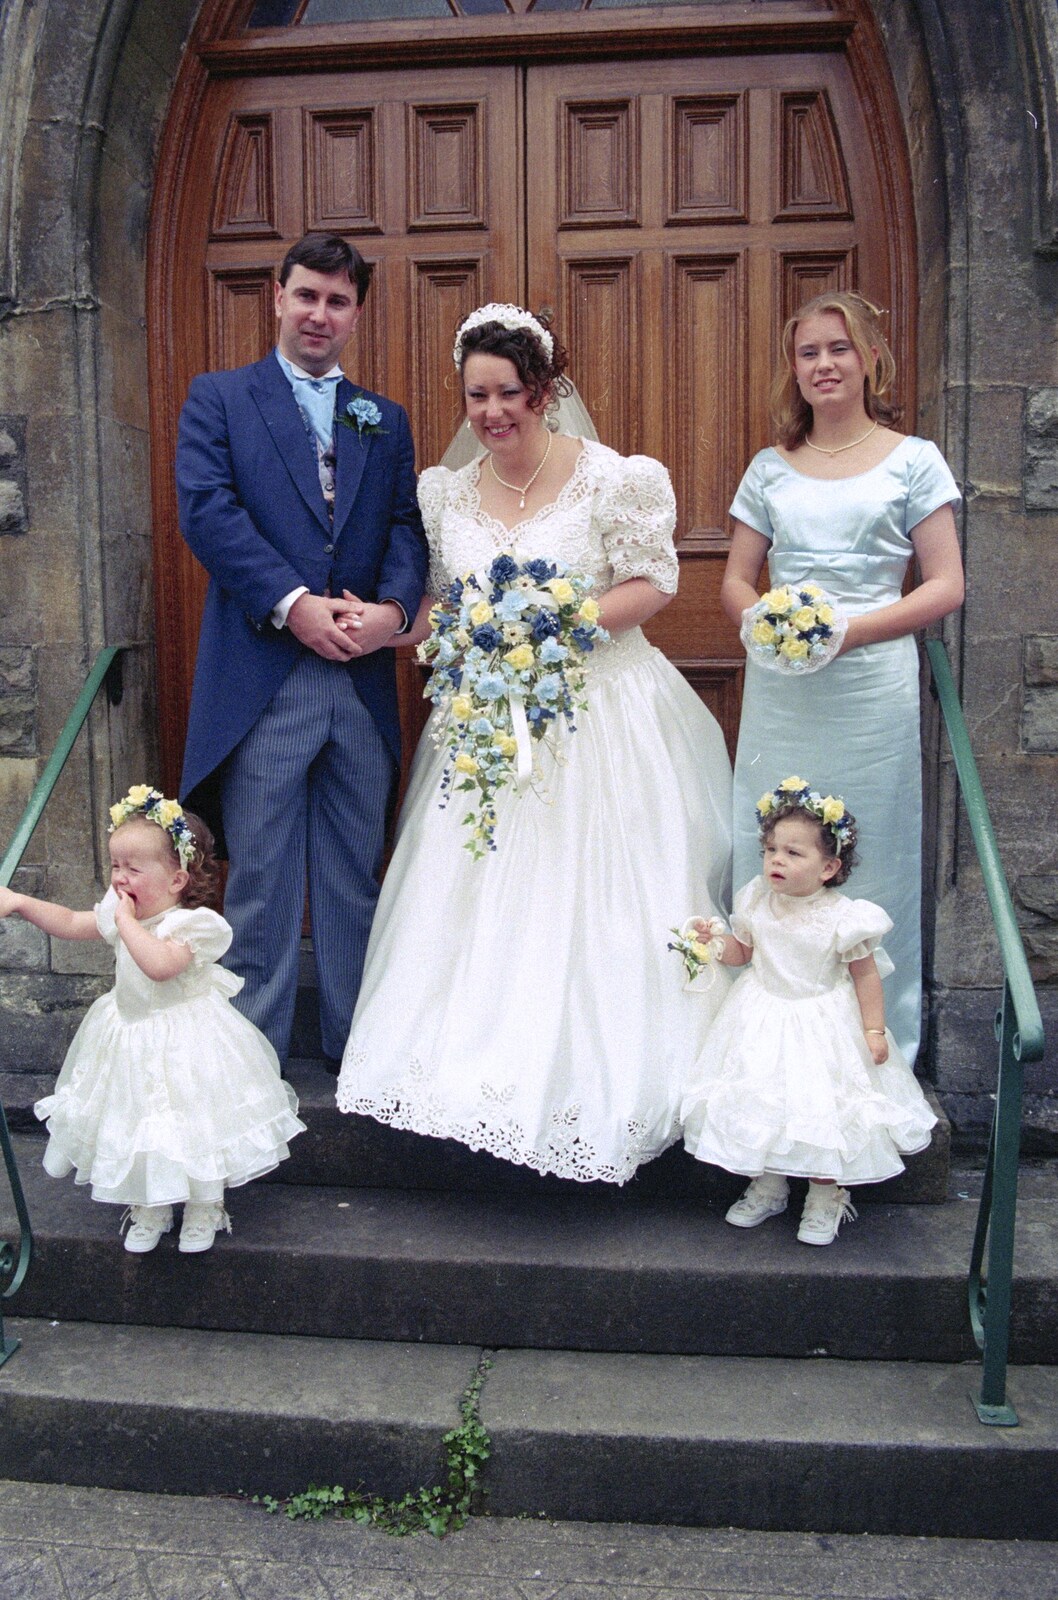 Riki's Wedding, Treboeth, Swansea - 7th May 1996: One of the bridesmaids has had enough